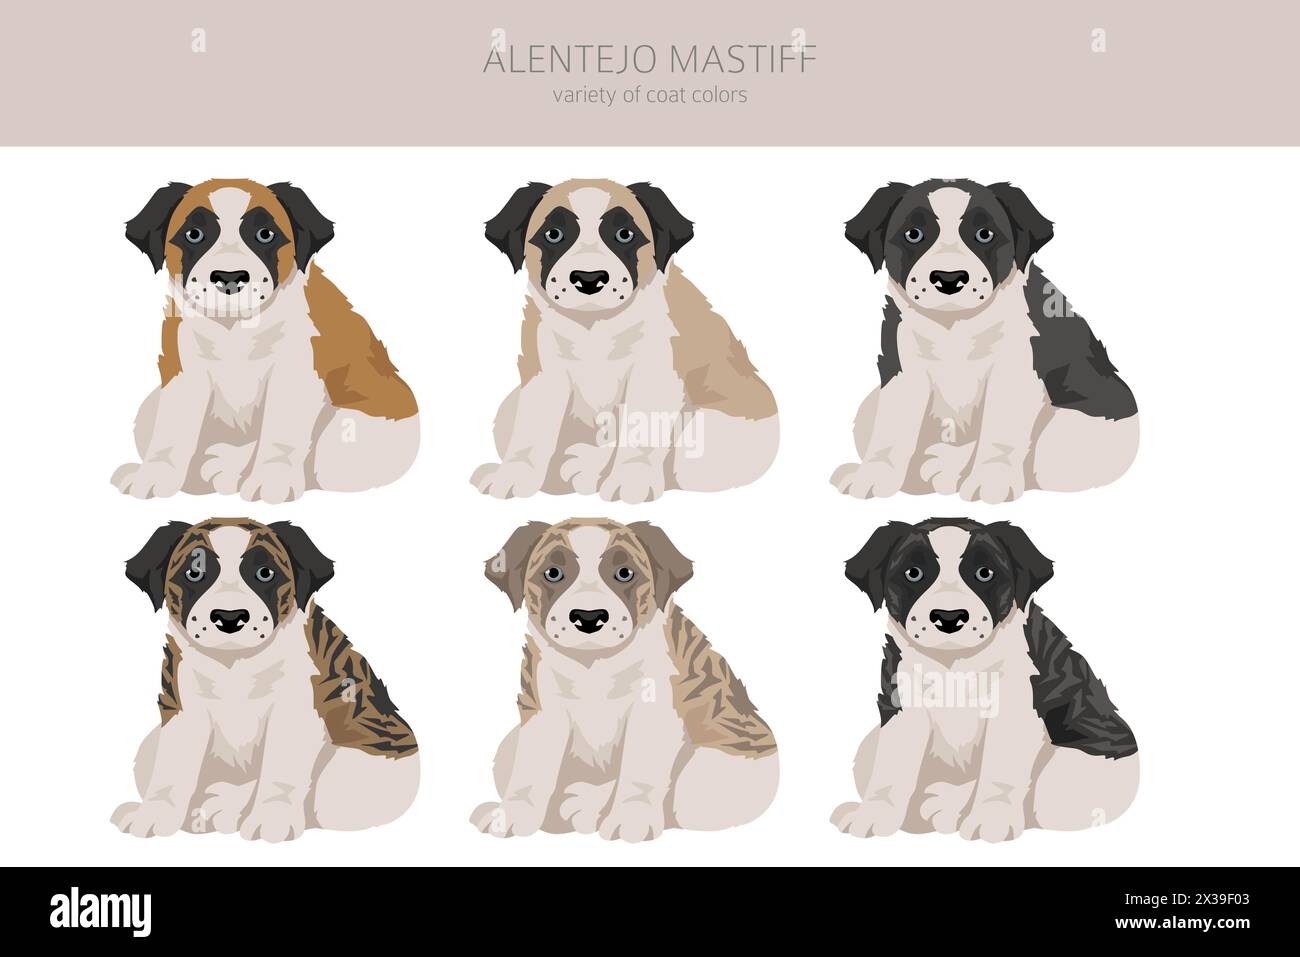 Alentejo mastiff puppy all colours clipart. Different coat colors set.  Vector illustration Stock Vector